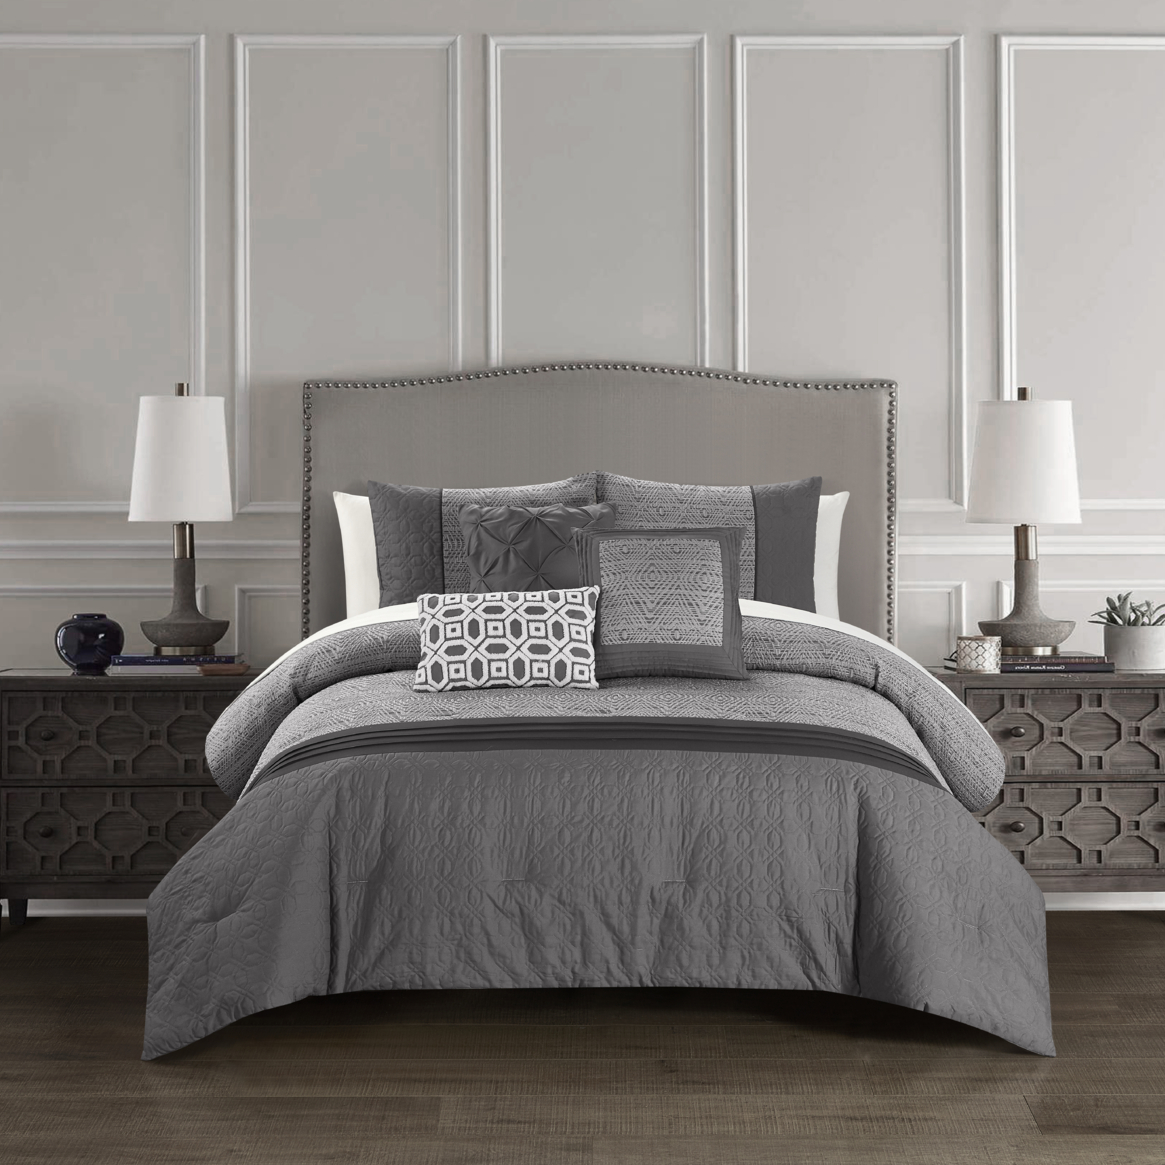 Malda 6 Piece Comforter Set Jacquard Geometric Diamond Pattern Color Block Design Bedding - grey, queen